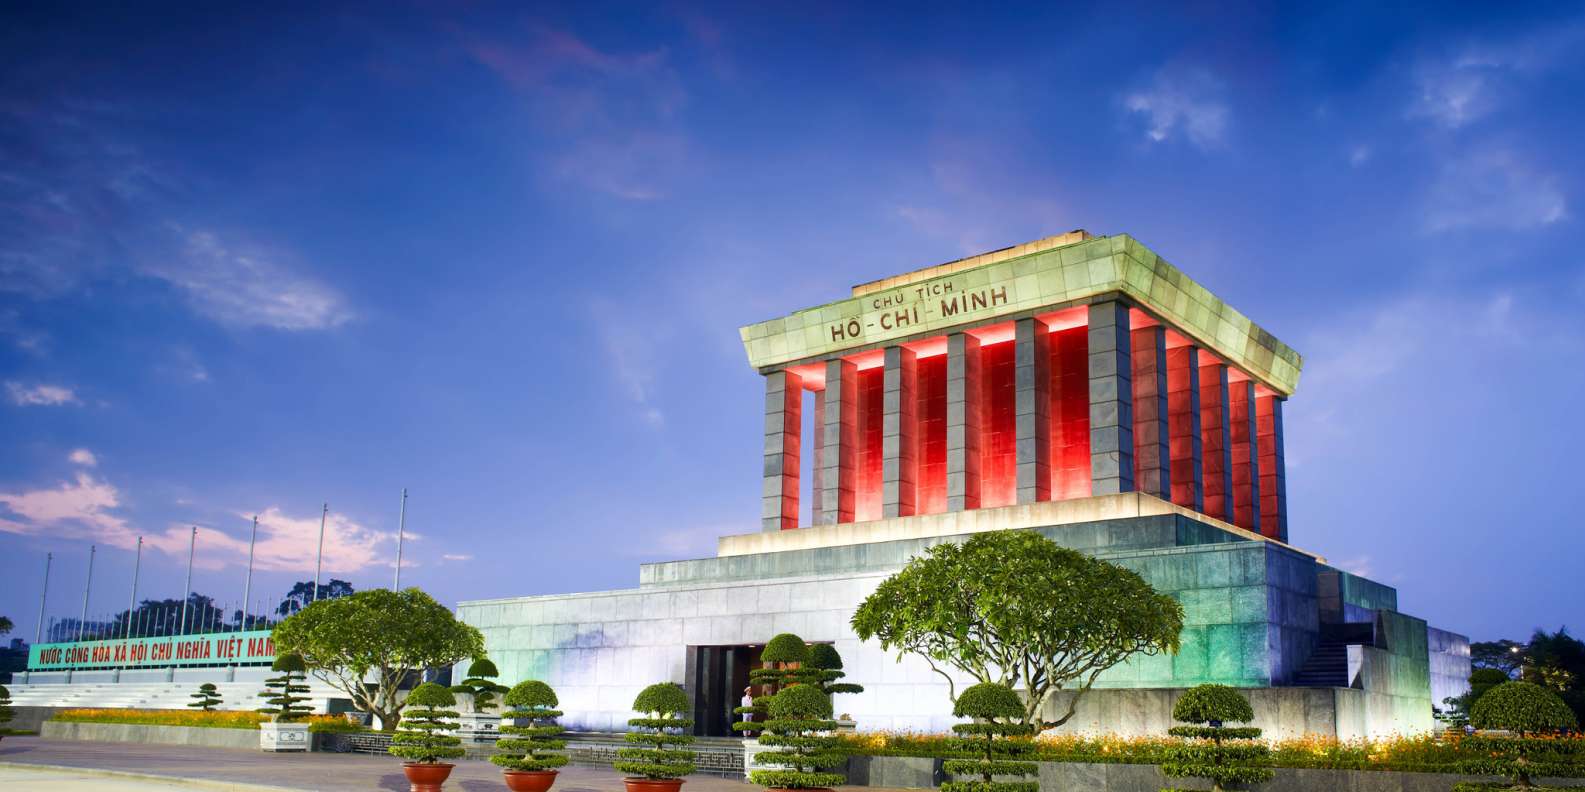 Ho Chi Minh Mausoleum, Hanoi - Book Tickets & Tours | GetYourGuide